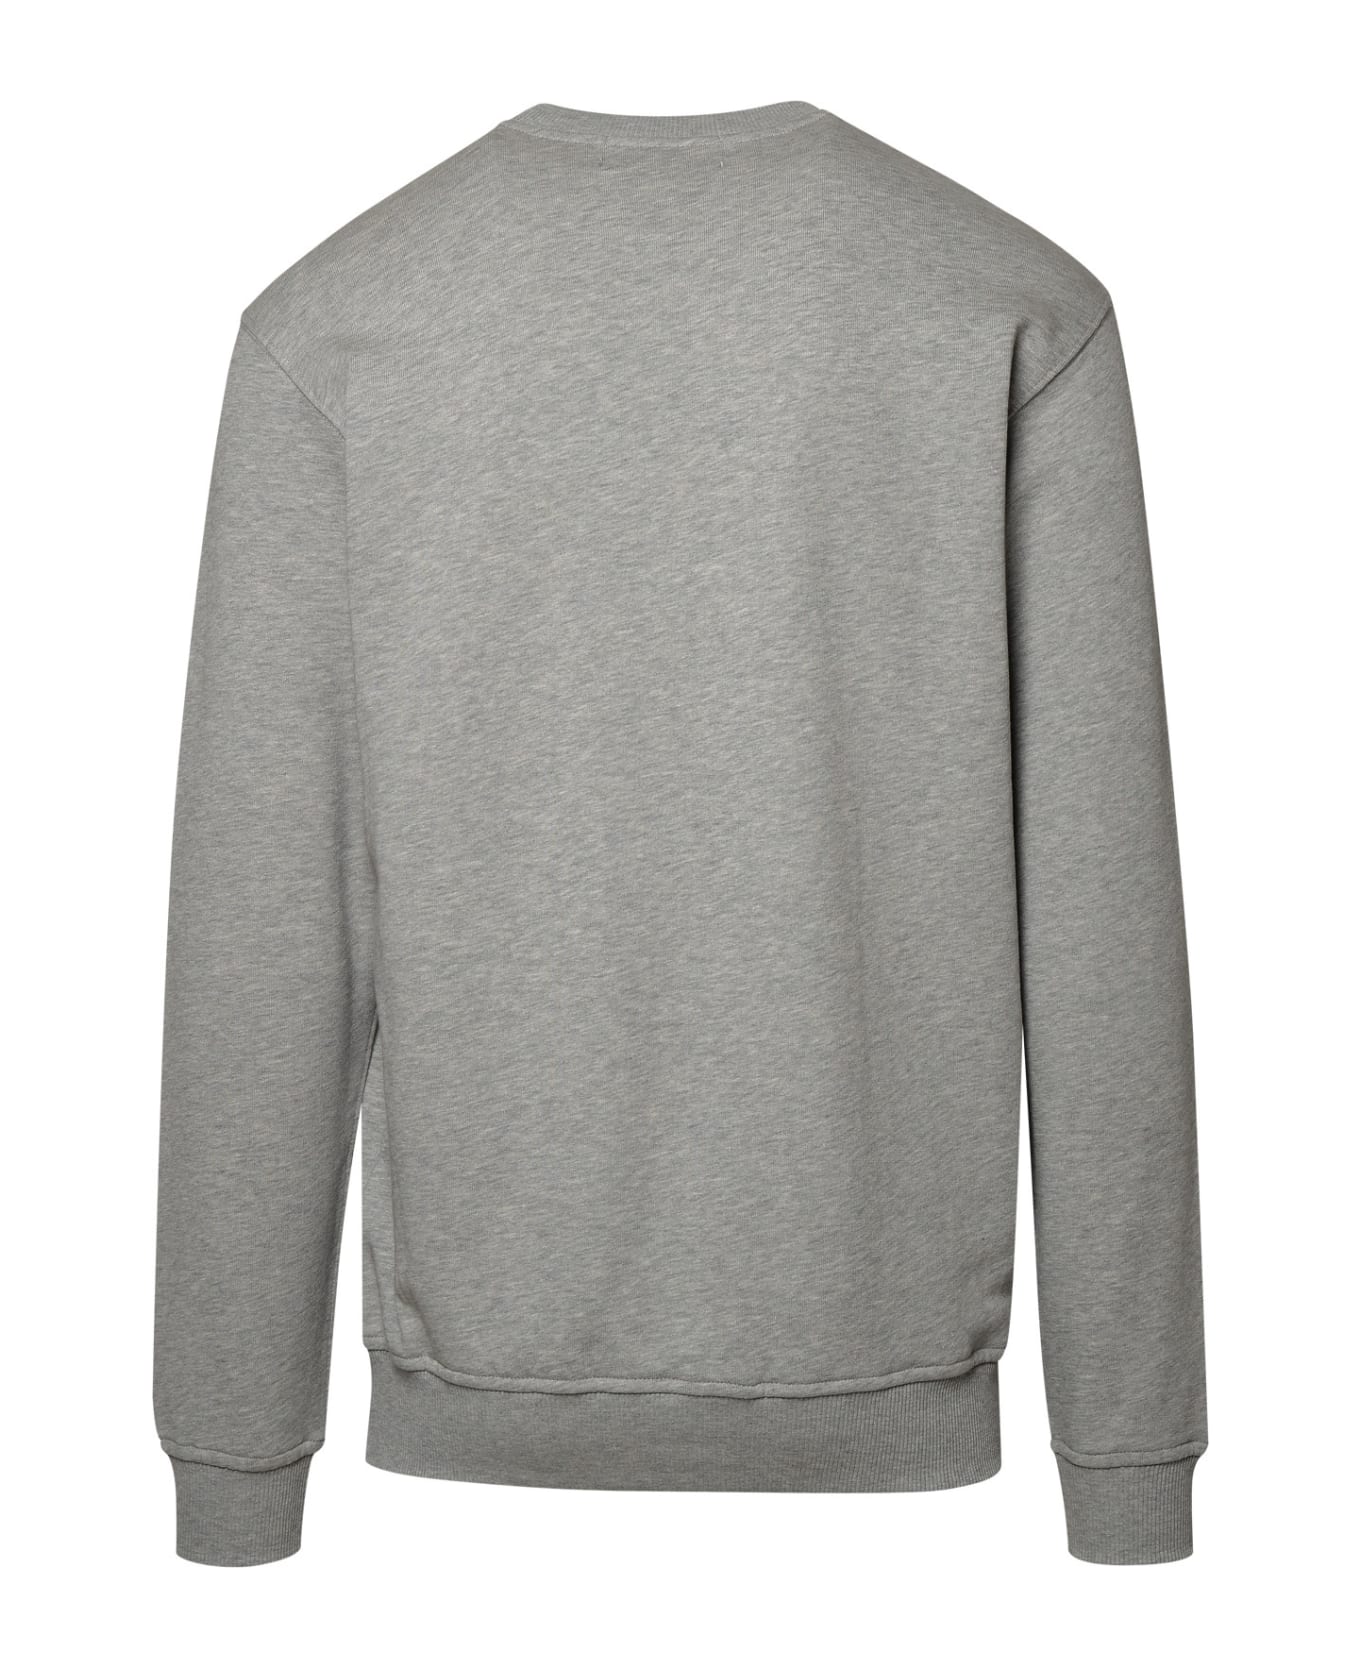 Comme des Garçons Shirt Gray Cotton Sweatshirt - Grey